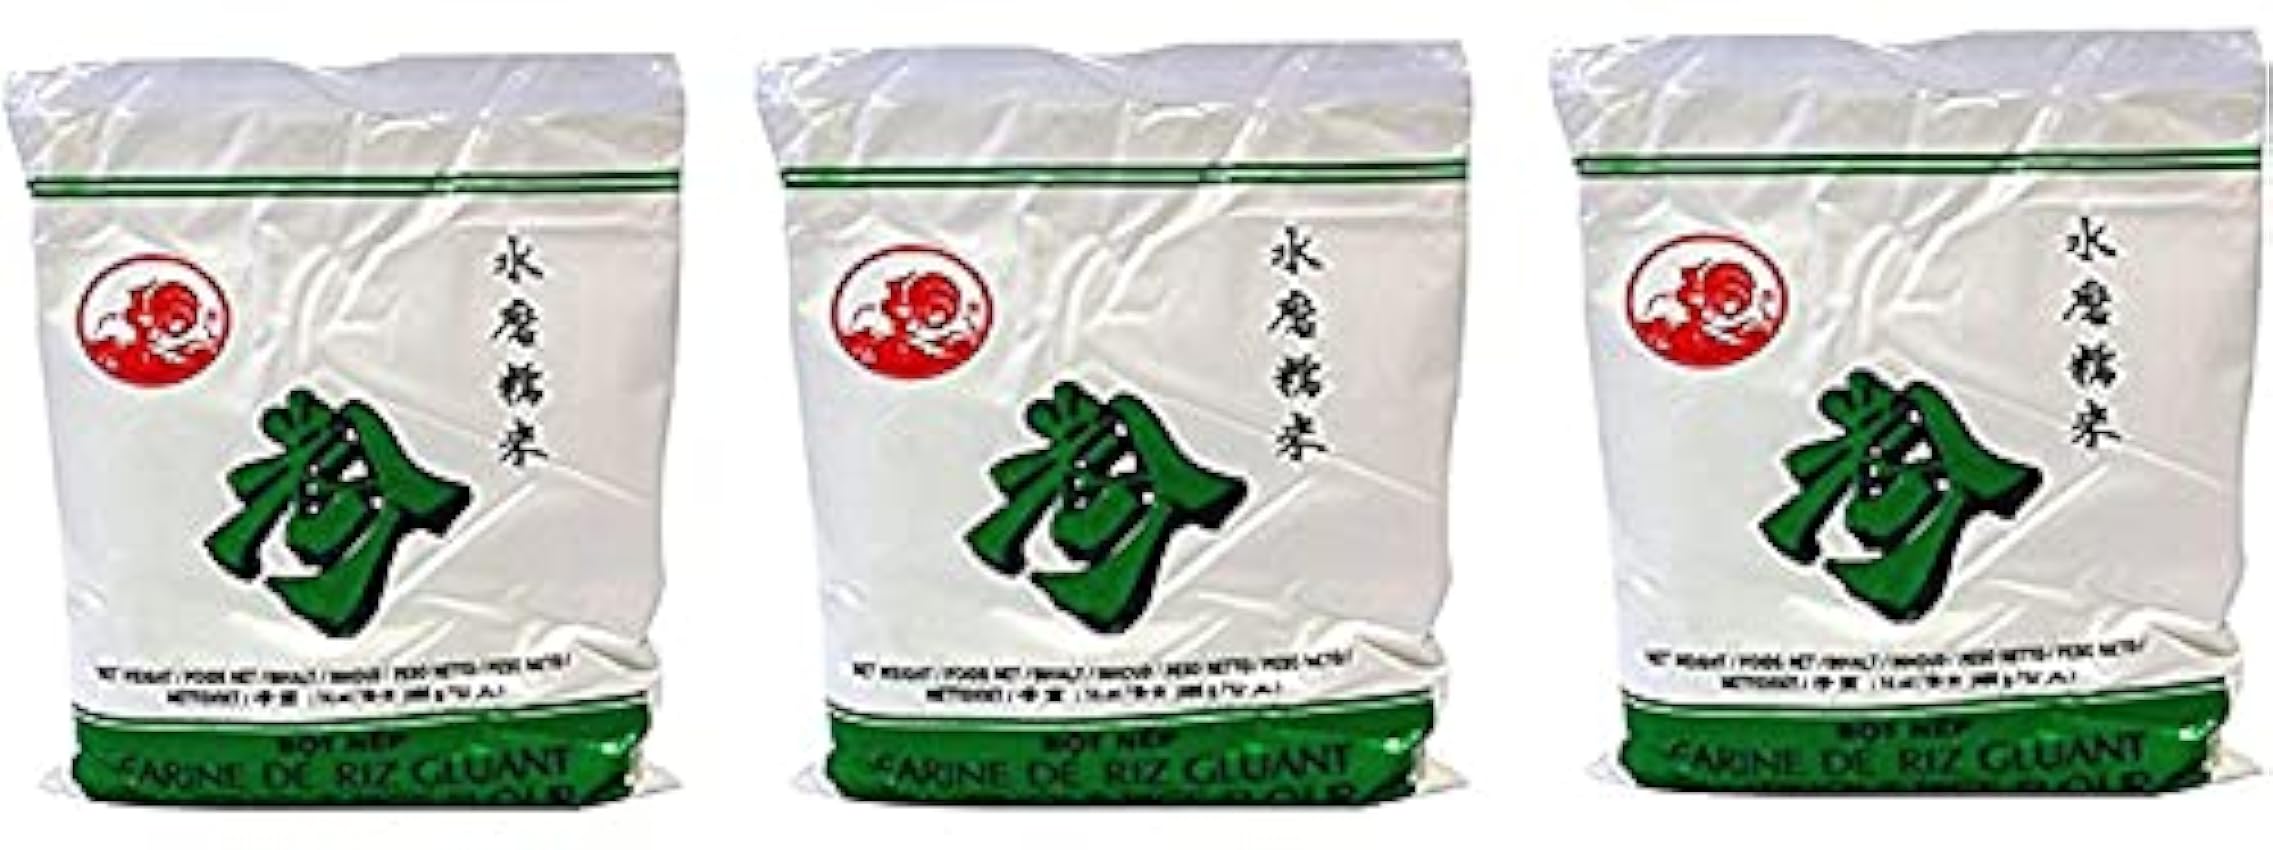 Cock Brand – Lot harina de arroz Gluant 3 x 400g ncsATN2i